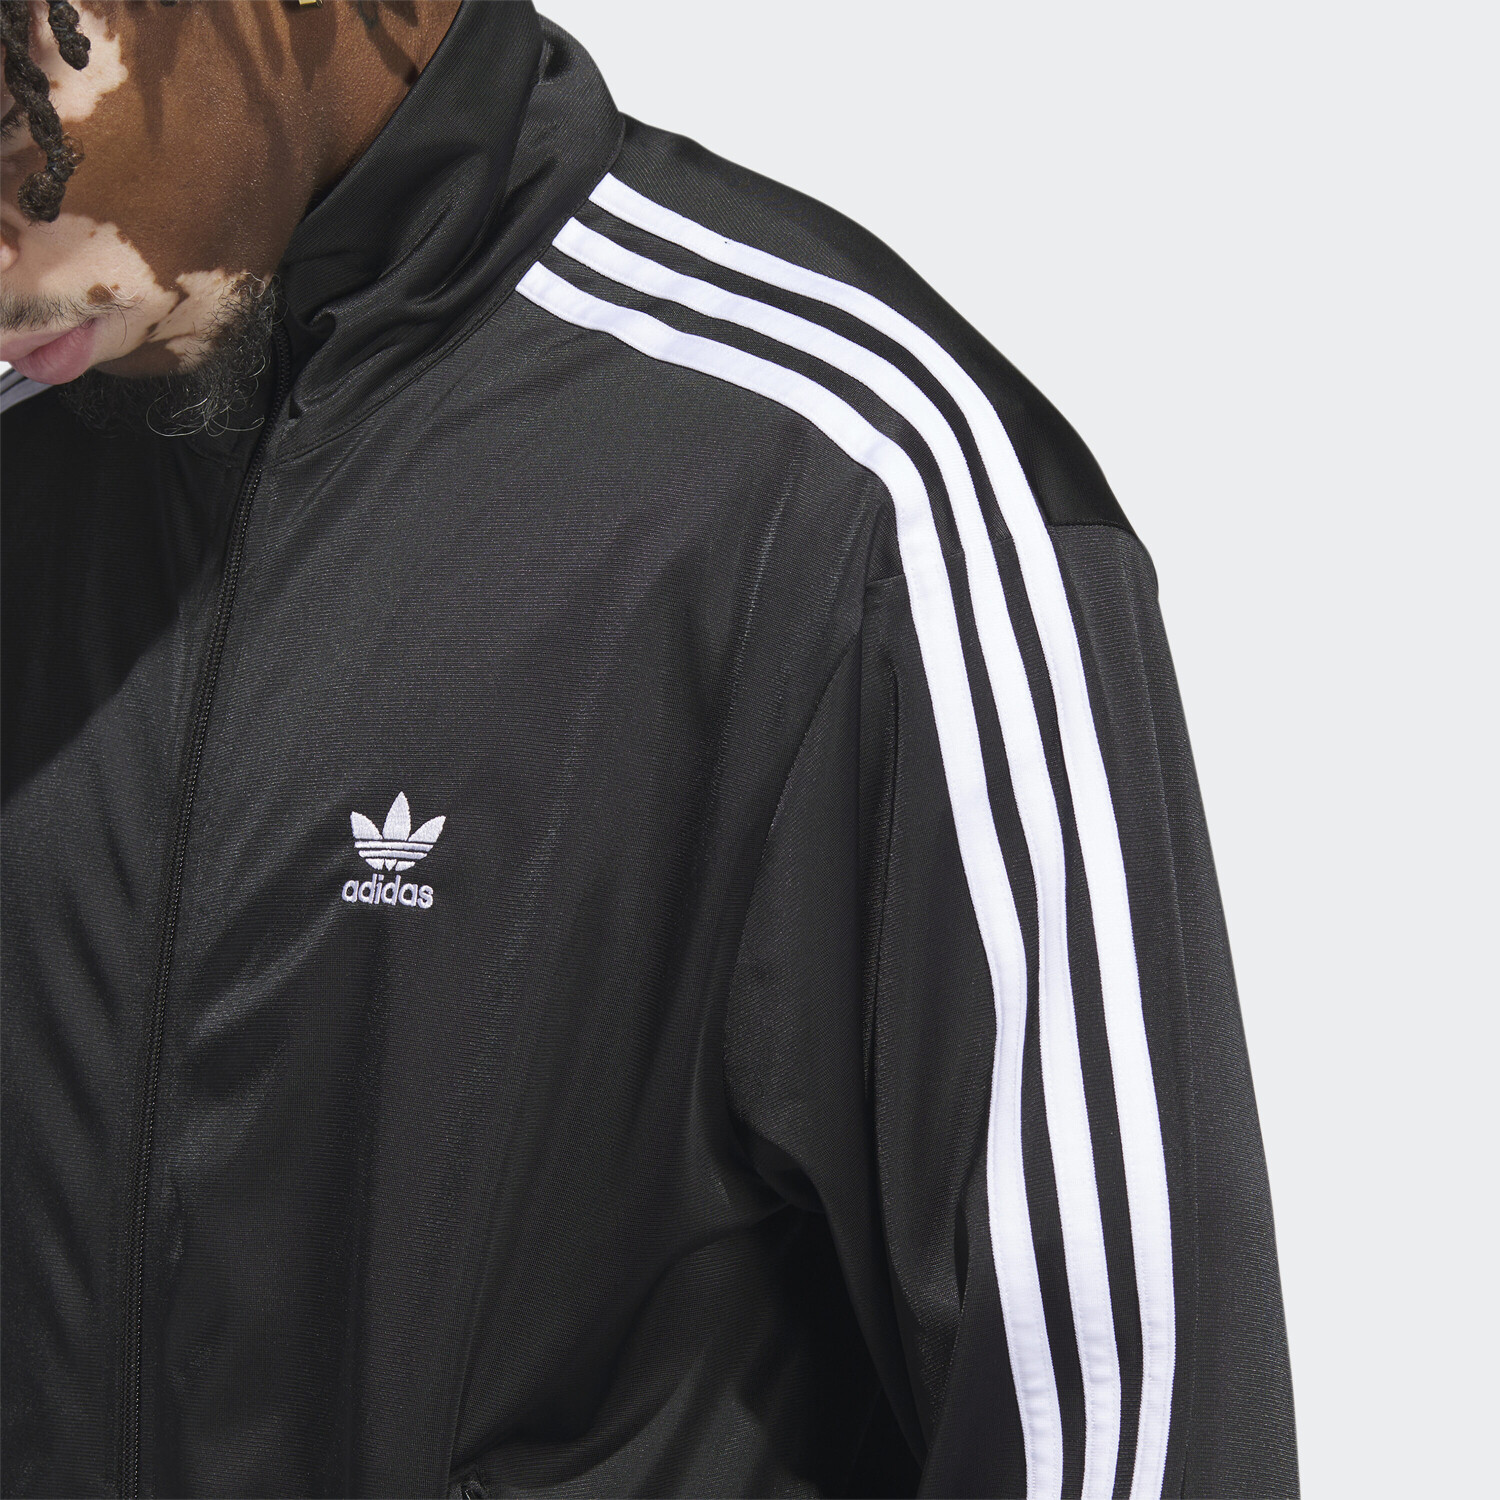 Preisvergleich | Adidas Man ab Classics Firebird € Originals 75,00 adicolor bei black/white (IJ7058) Jacket